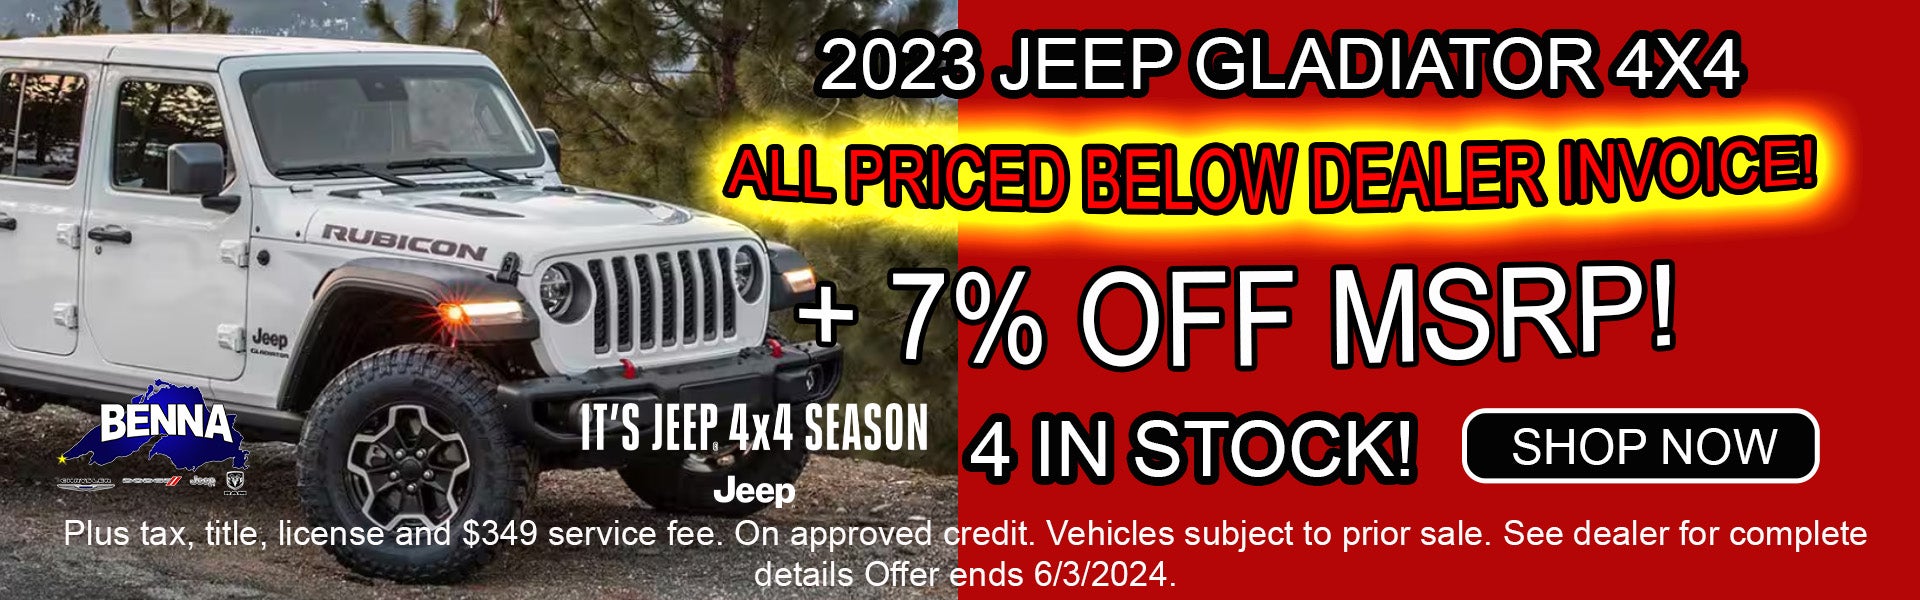 2023 Jeep Gladiator Priced Below Invoice Plus 7%